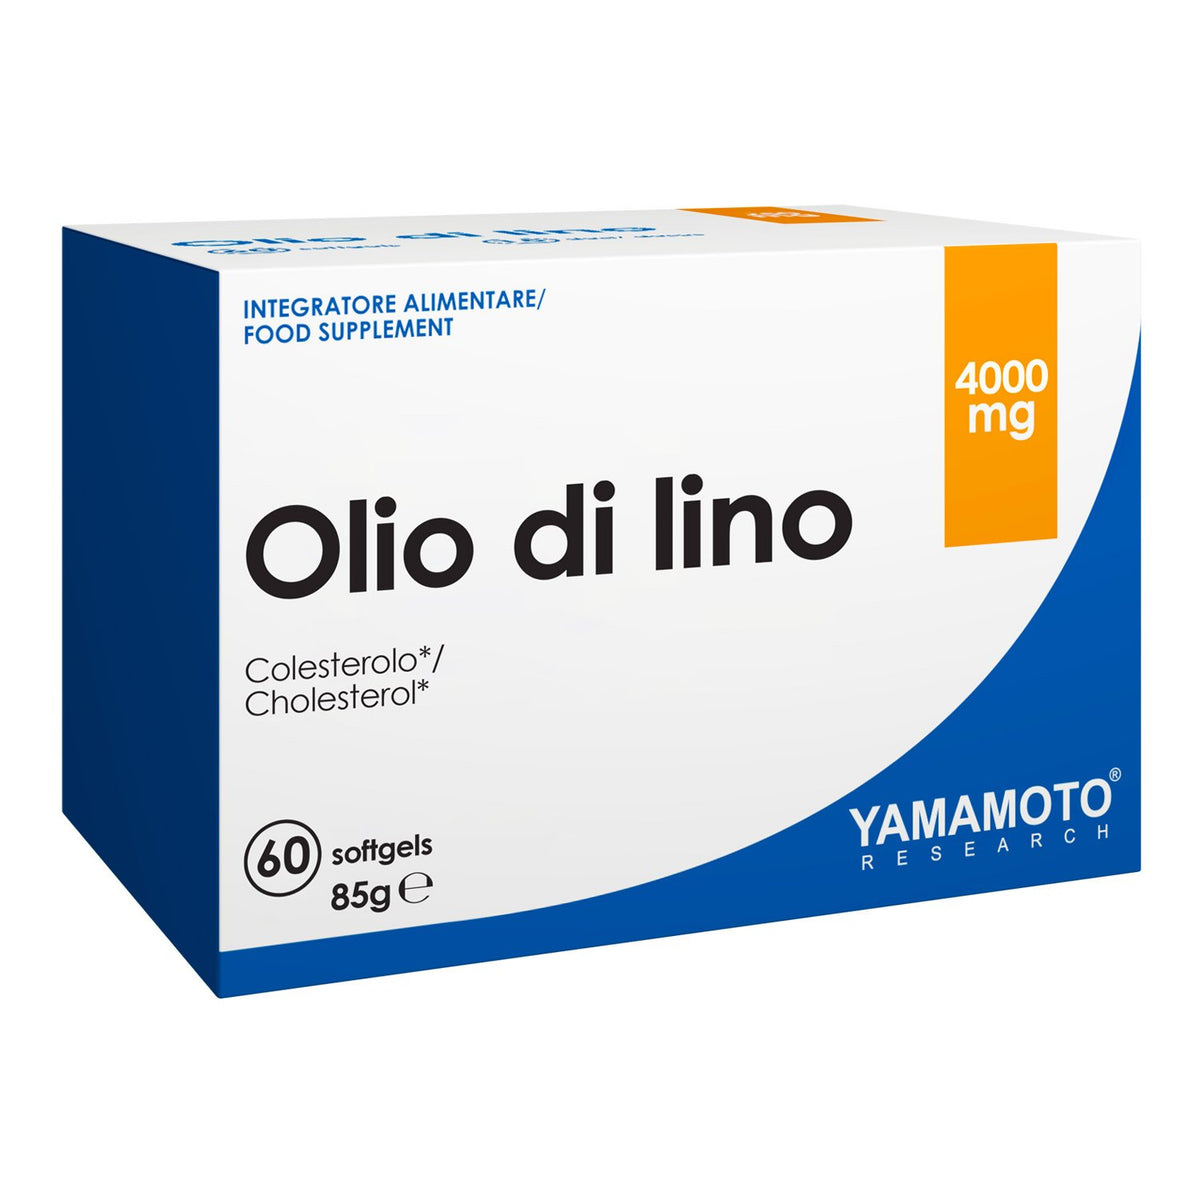 Olio di lino - 60 softgels - YAMAMOTO RESEARCH - Parafarmacia PHARMAGOLI